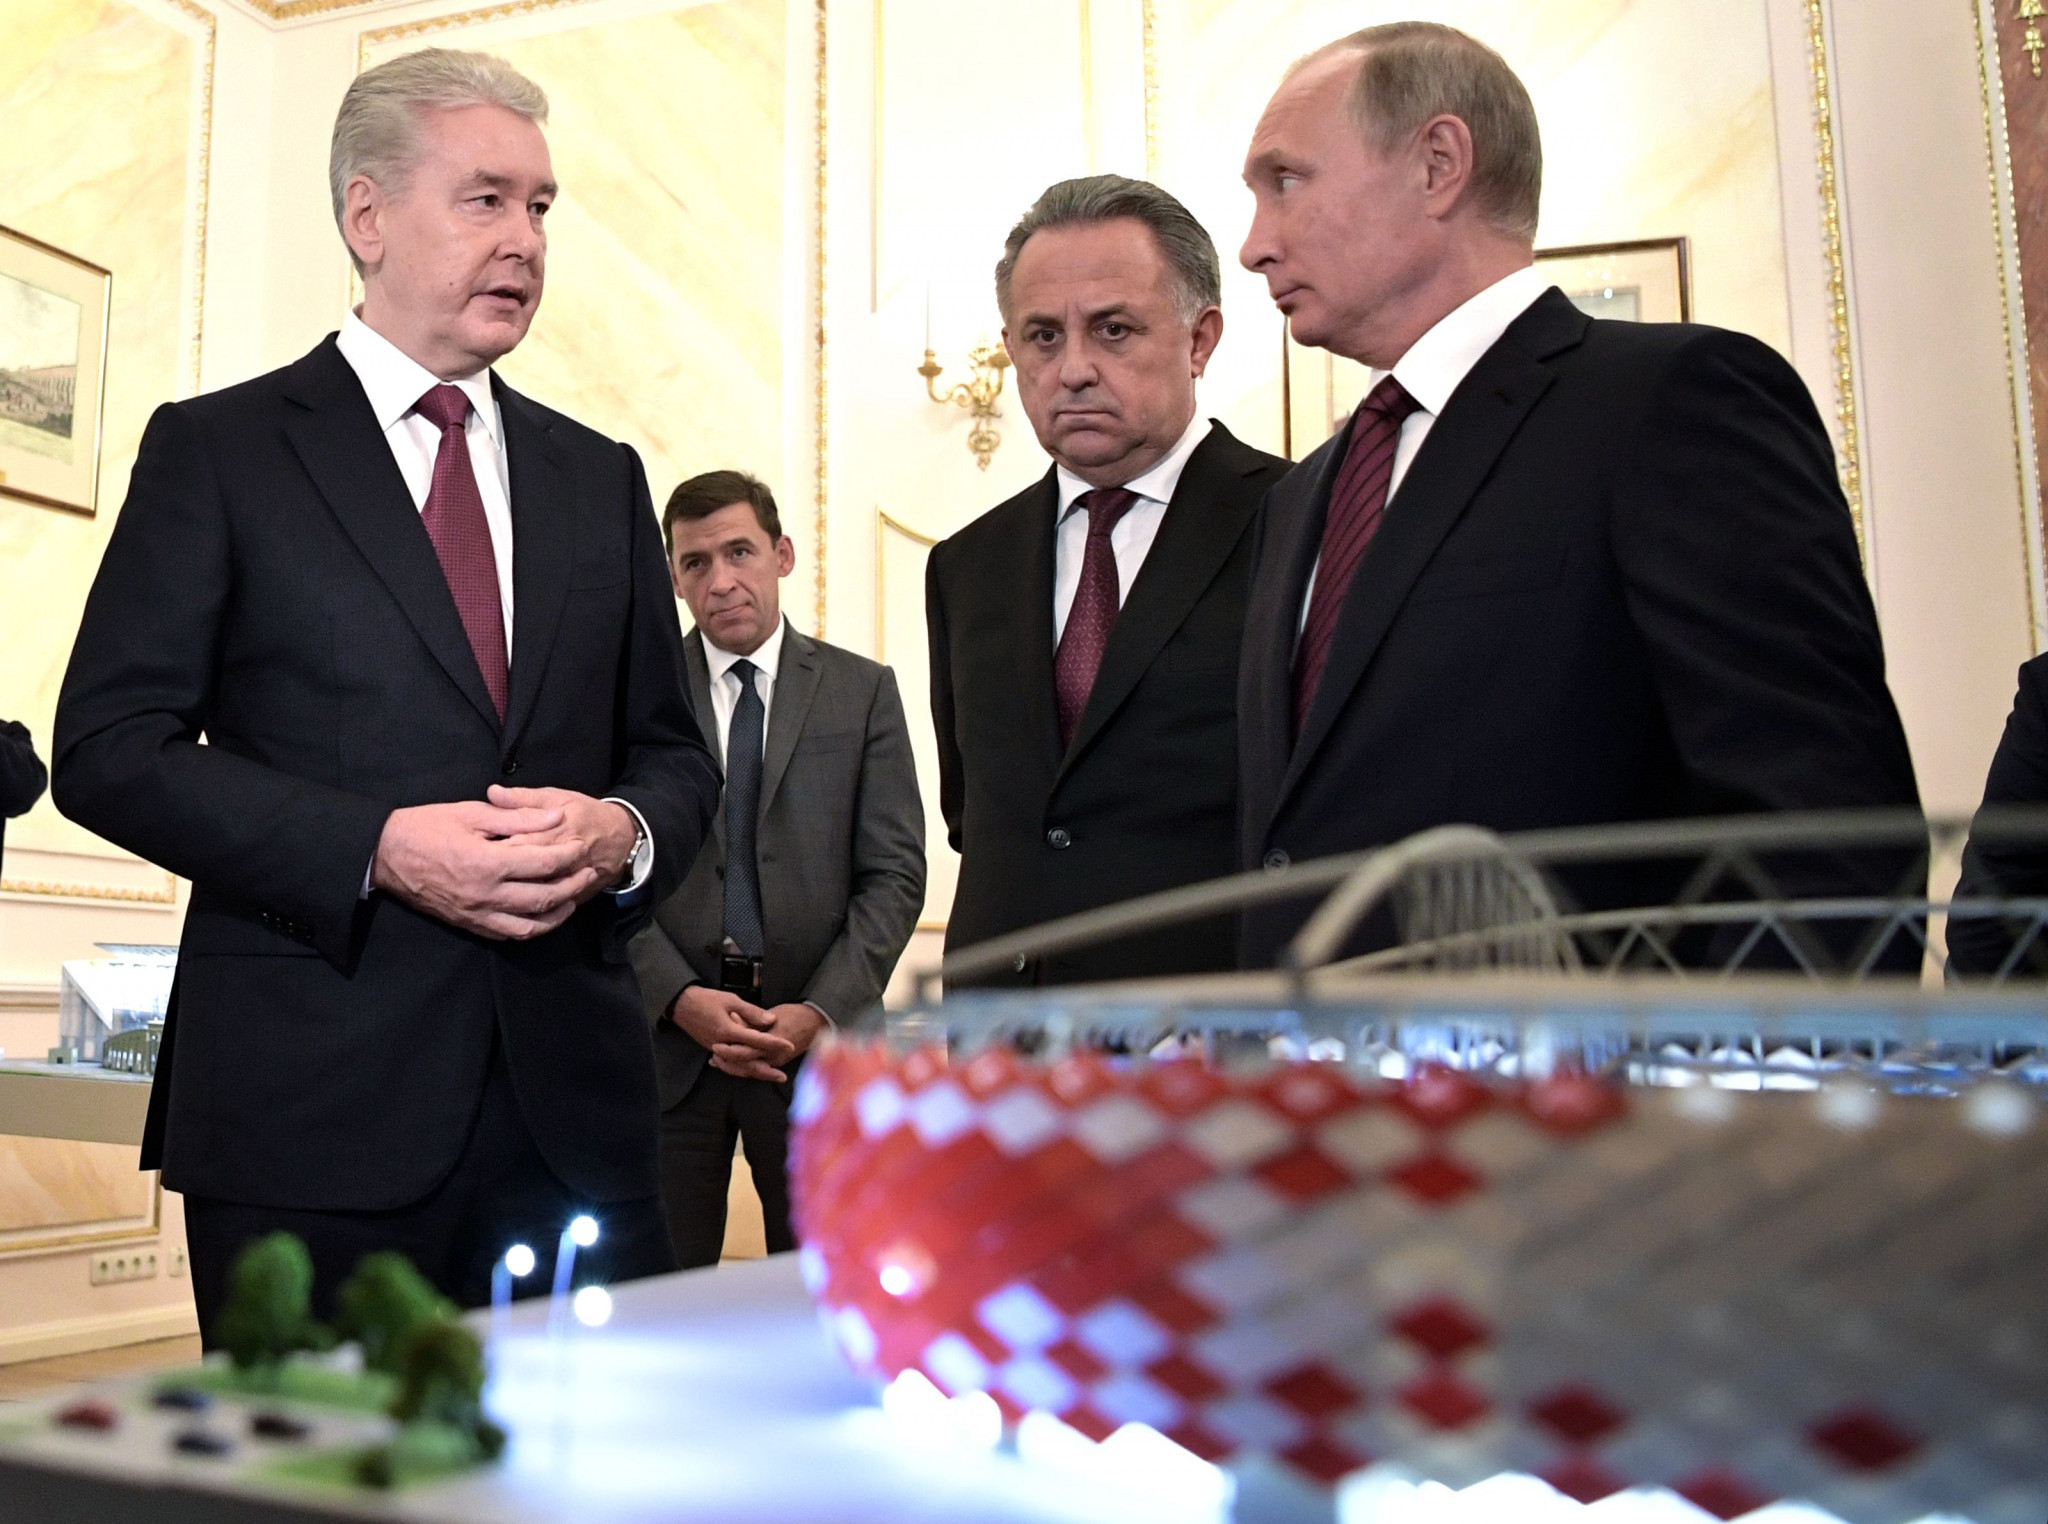 Putin confident construction of 2018 World Cup venues on track despite delays